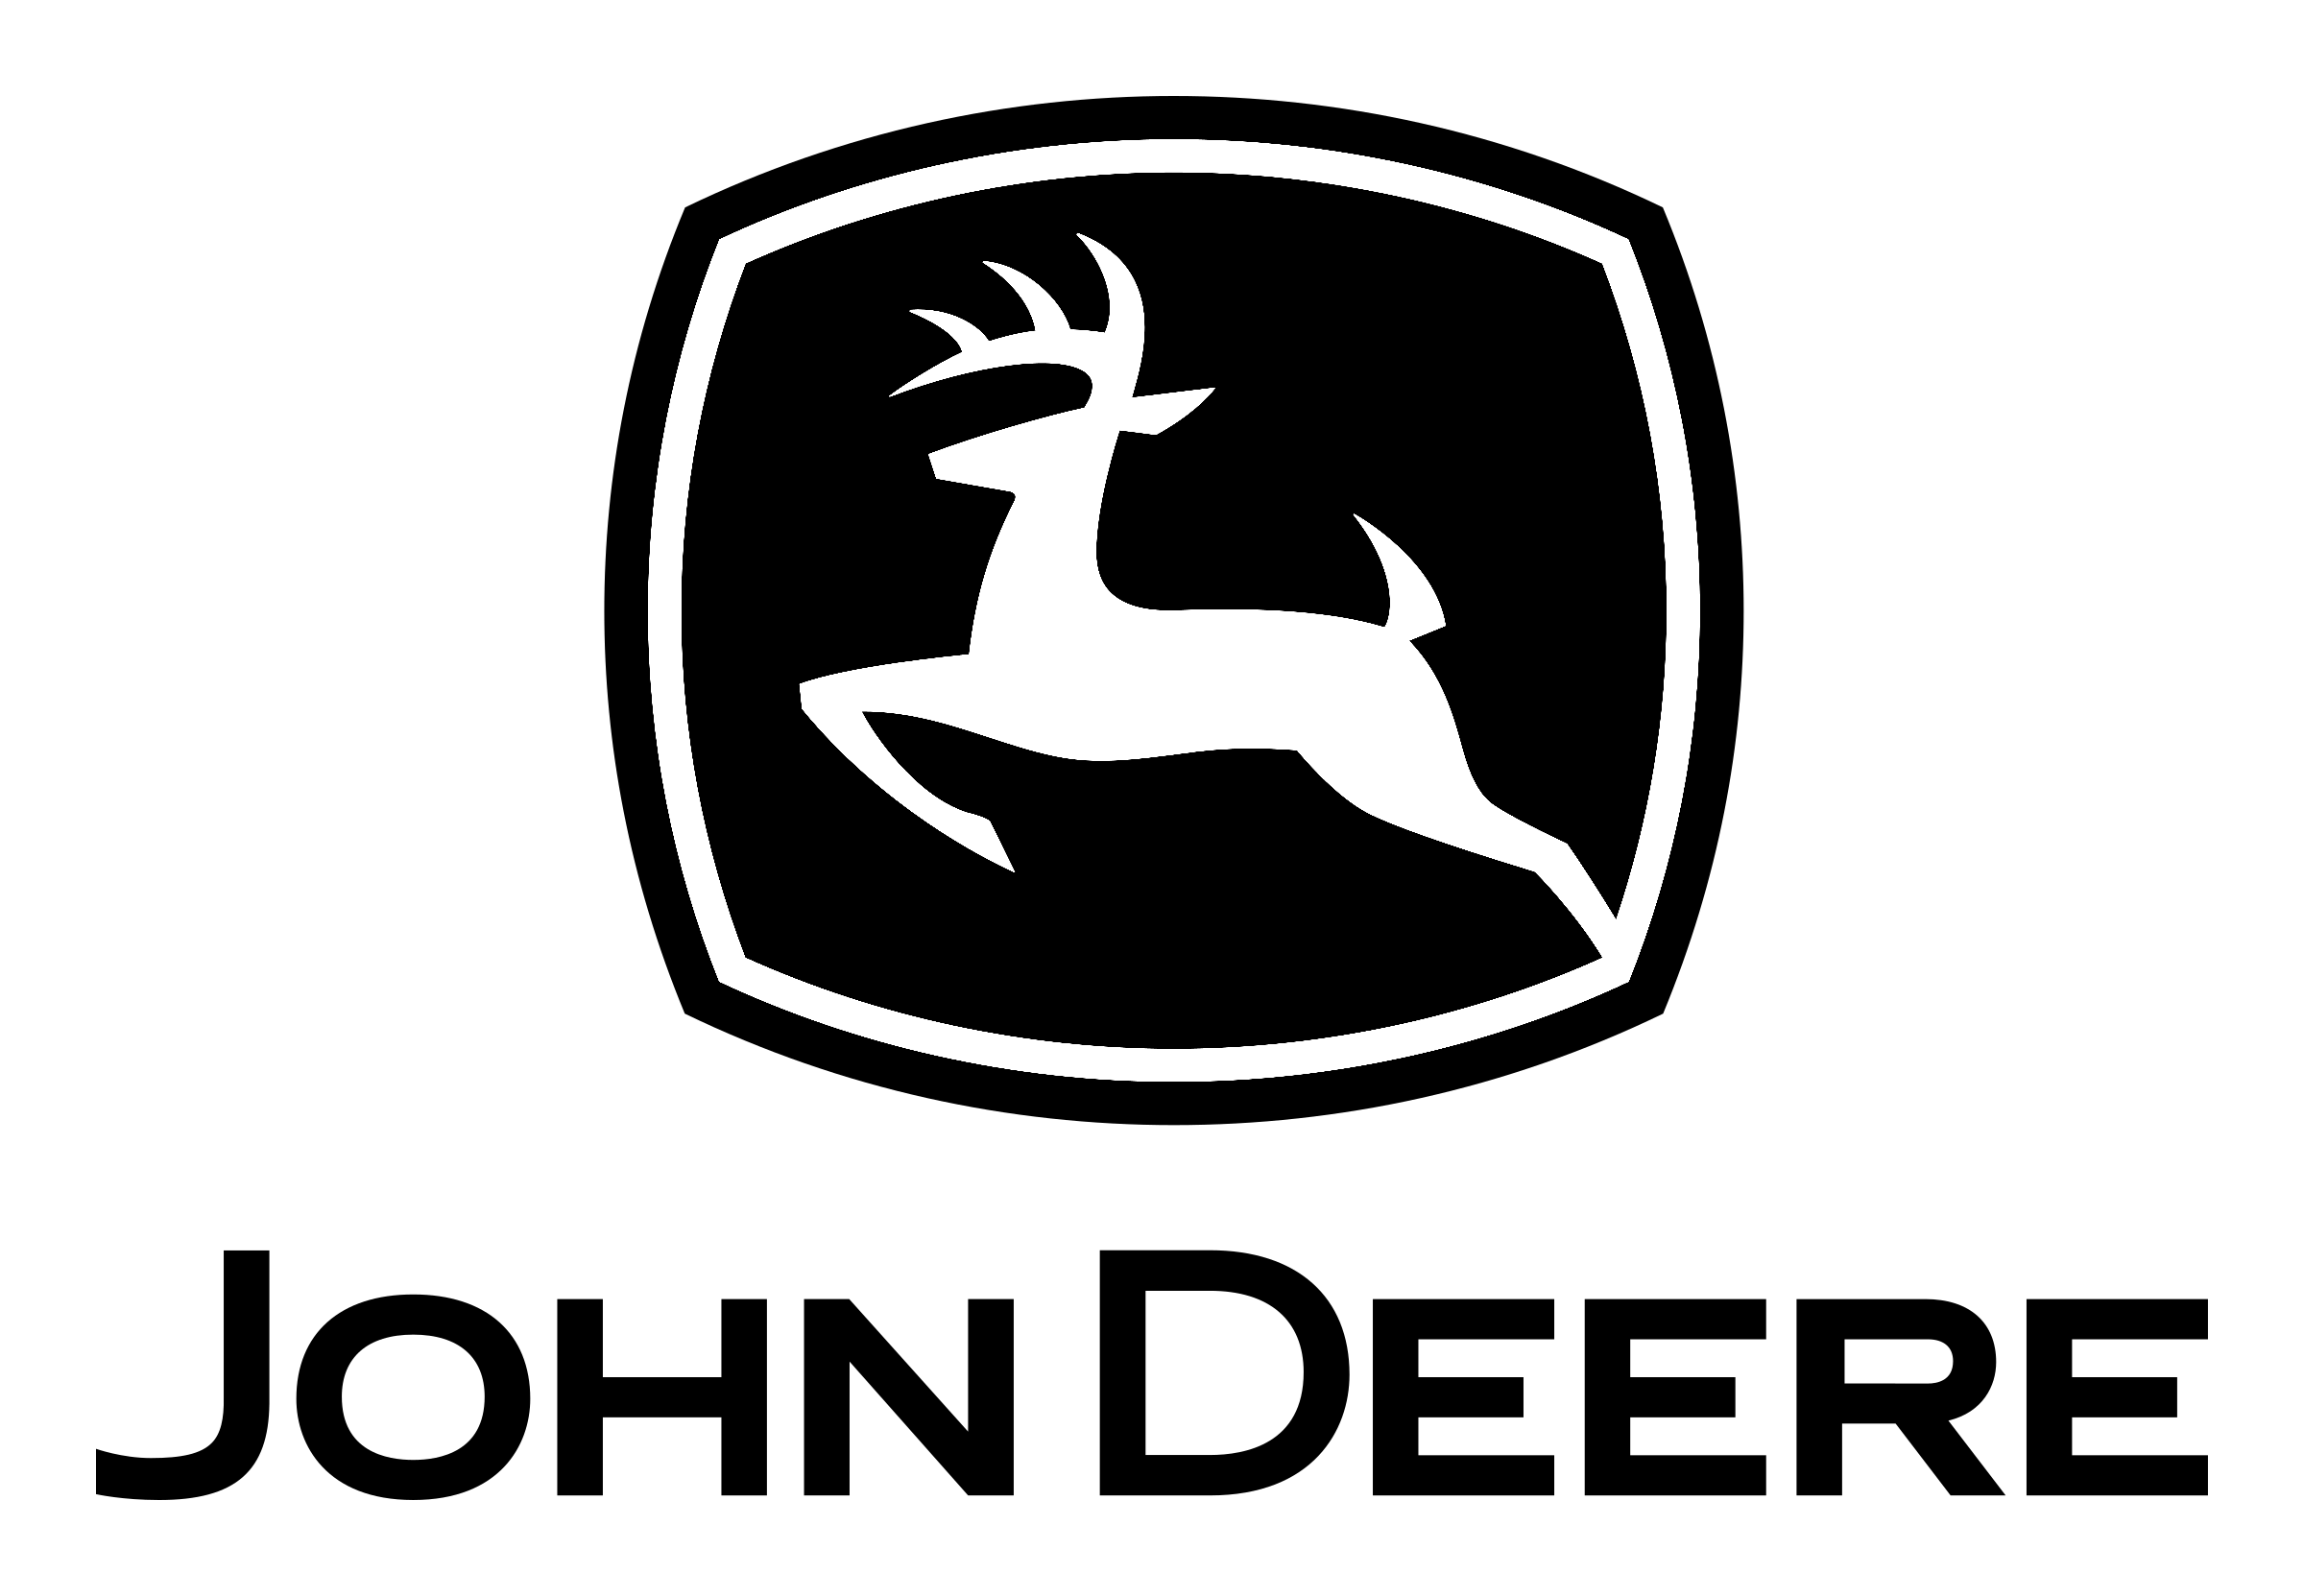 2018 John Deere Logo - Best Free John Deere Logo Vectors Photo Image